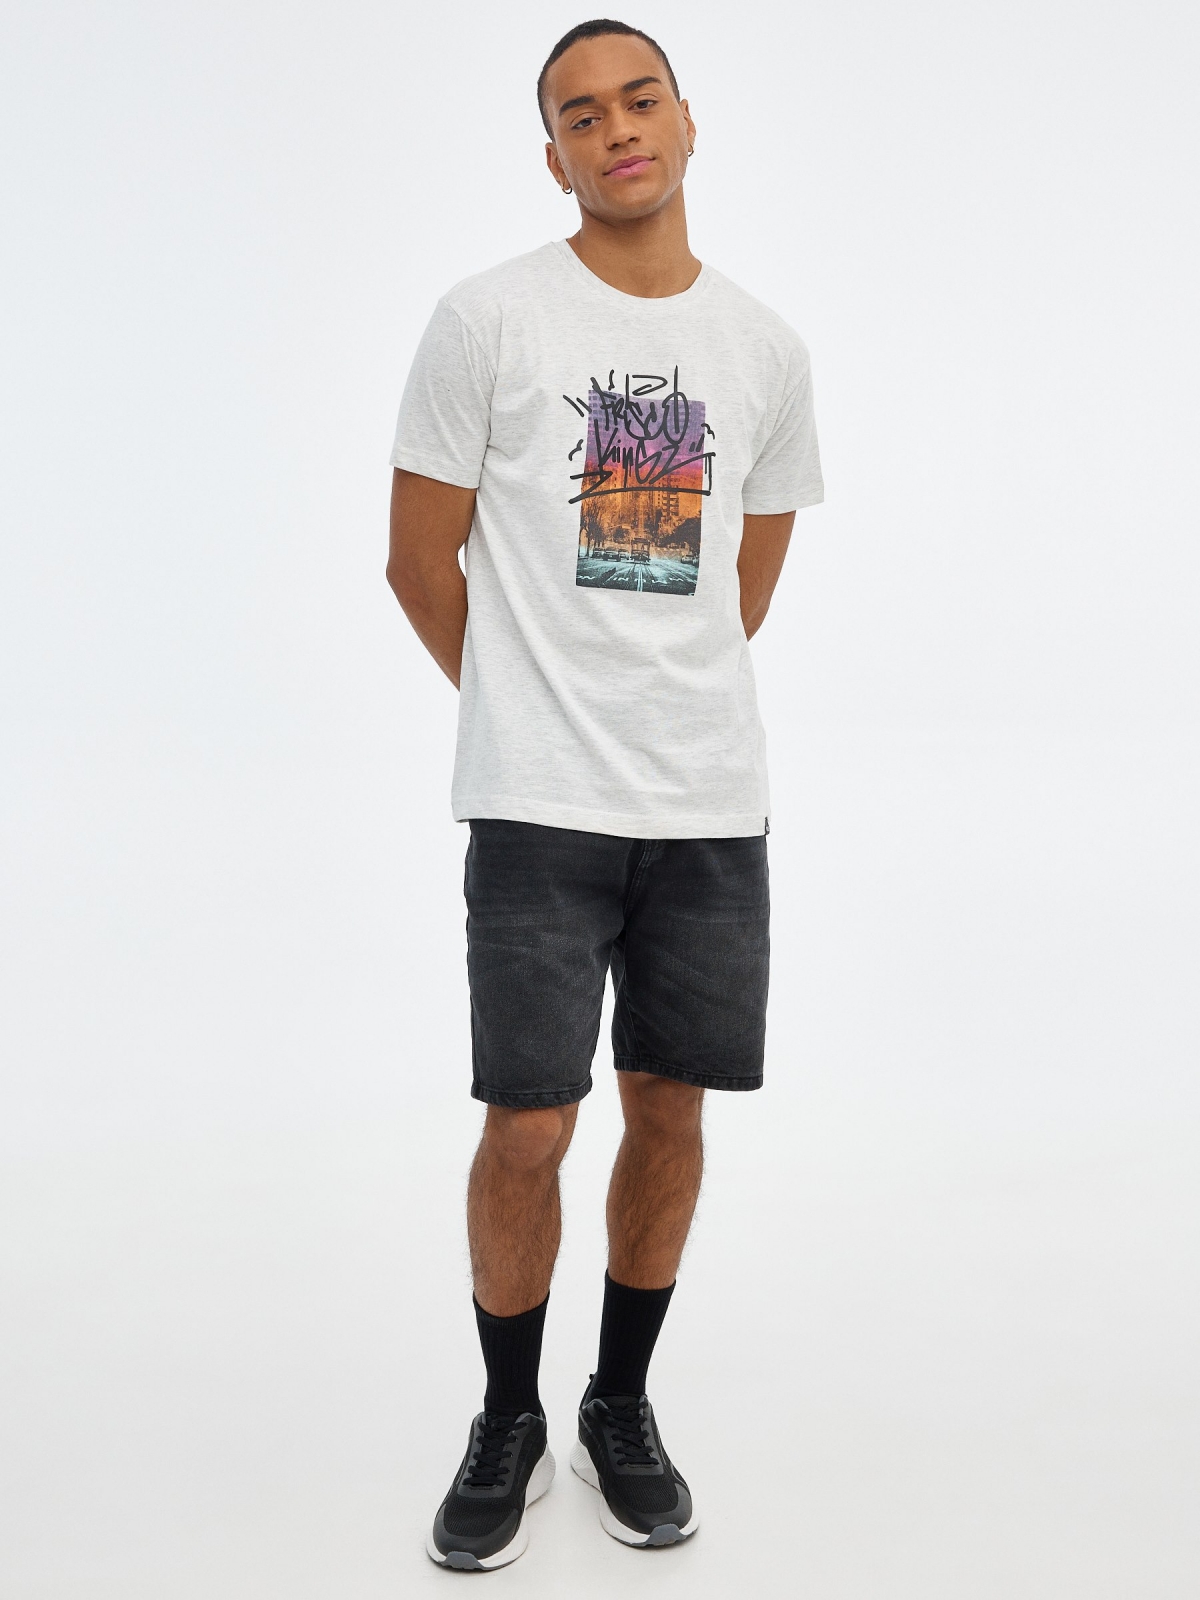 T-shirt com foto e graffiti cinza vista geral frontal